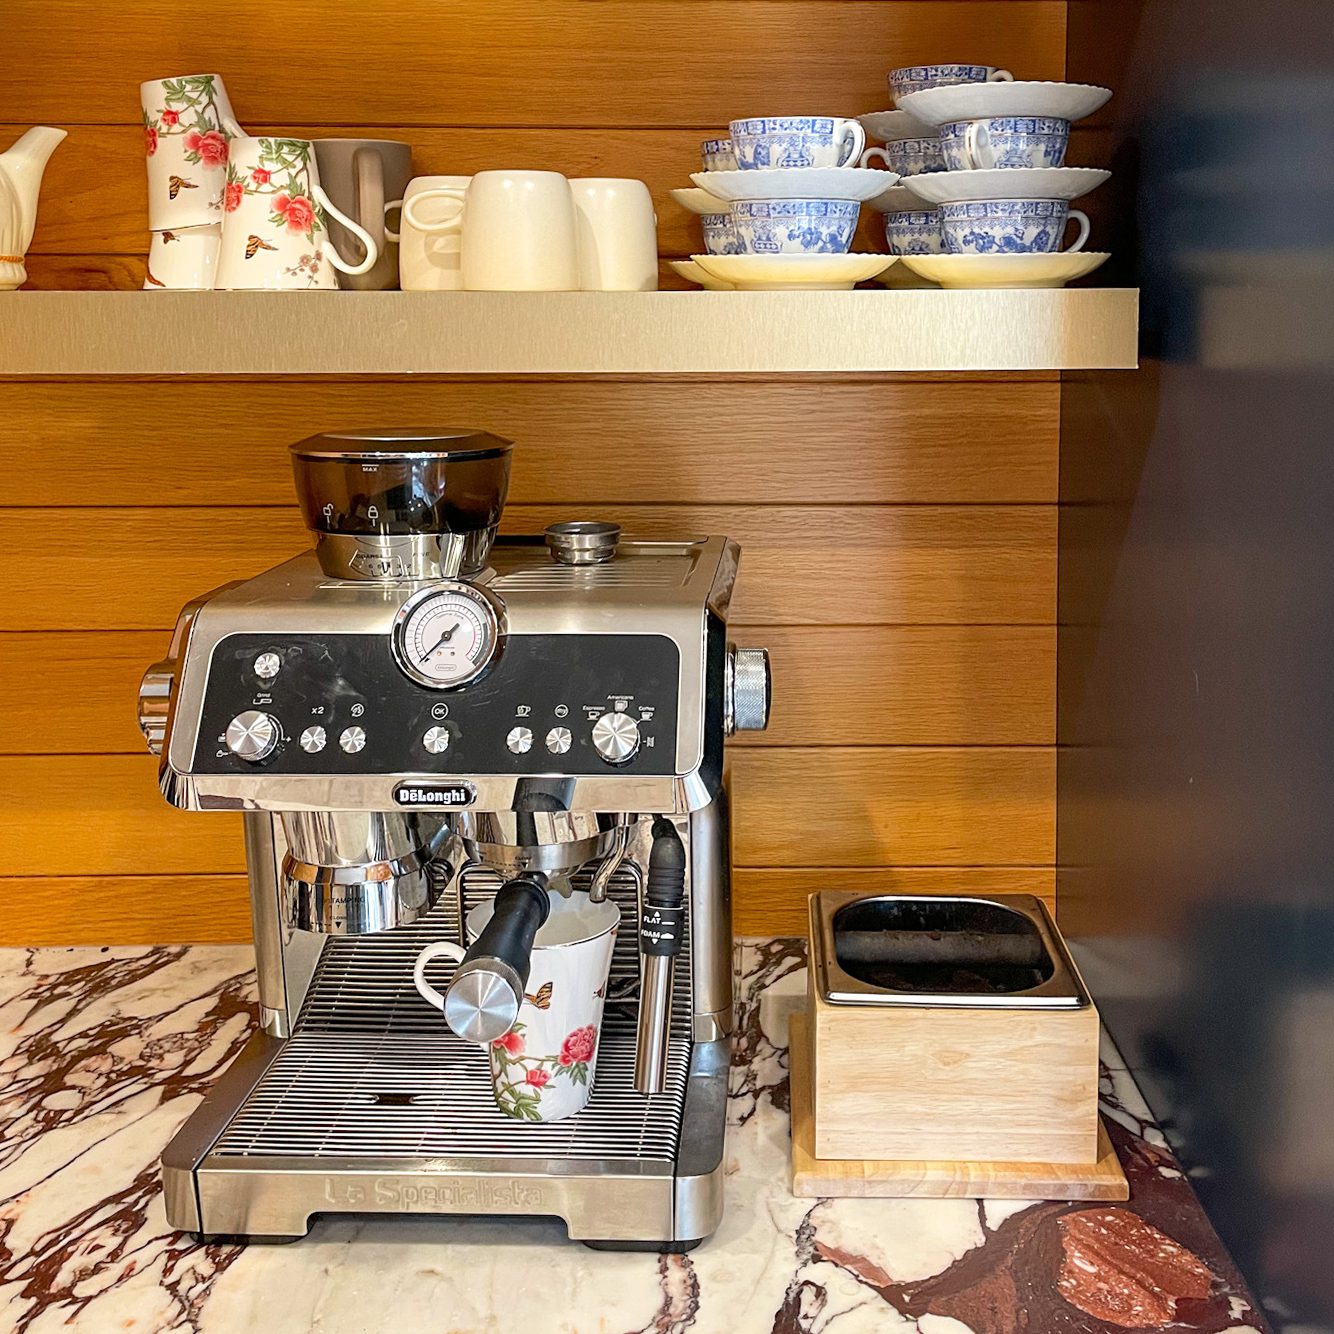 How the Delonghi Coffee Machine Works?